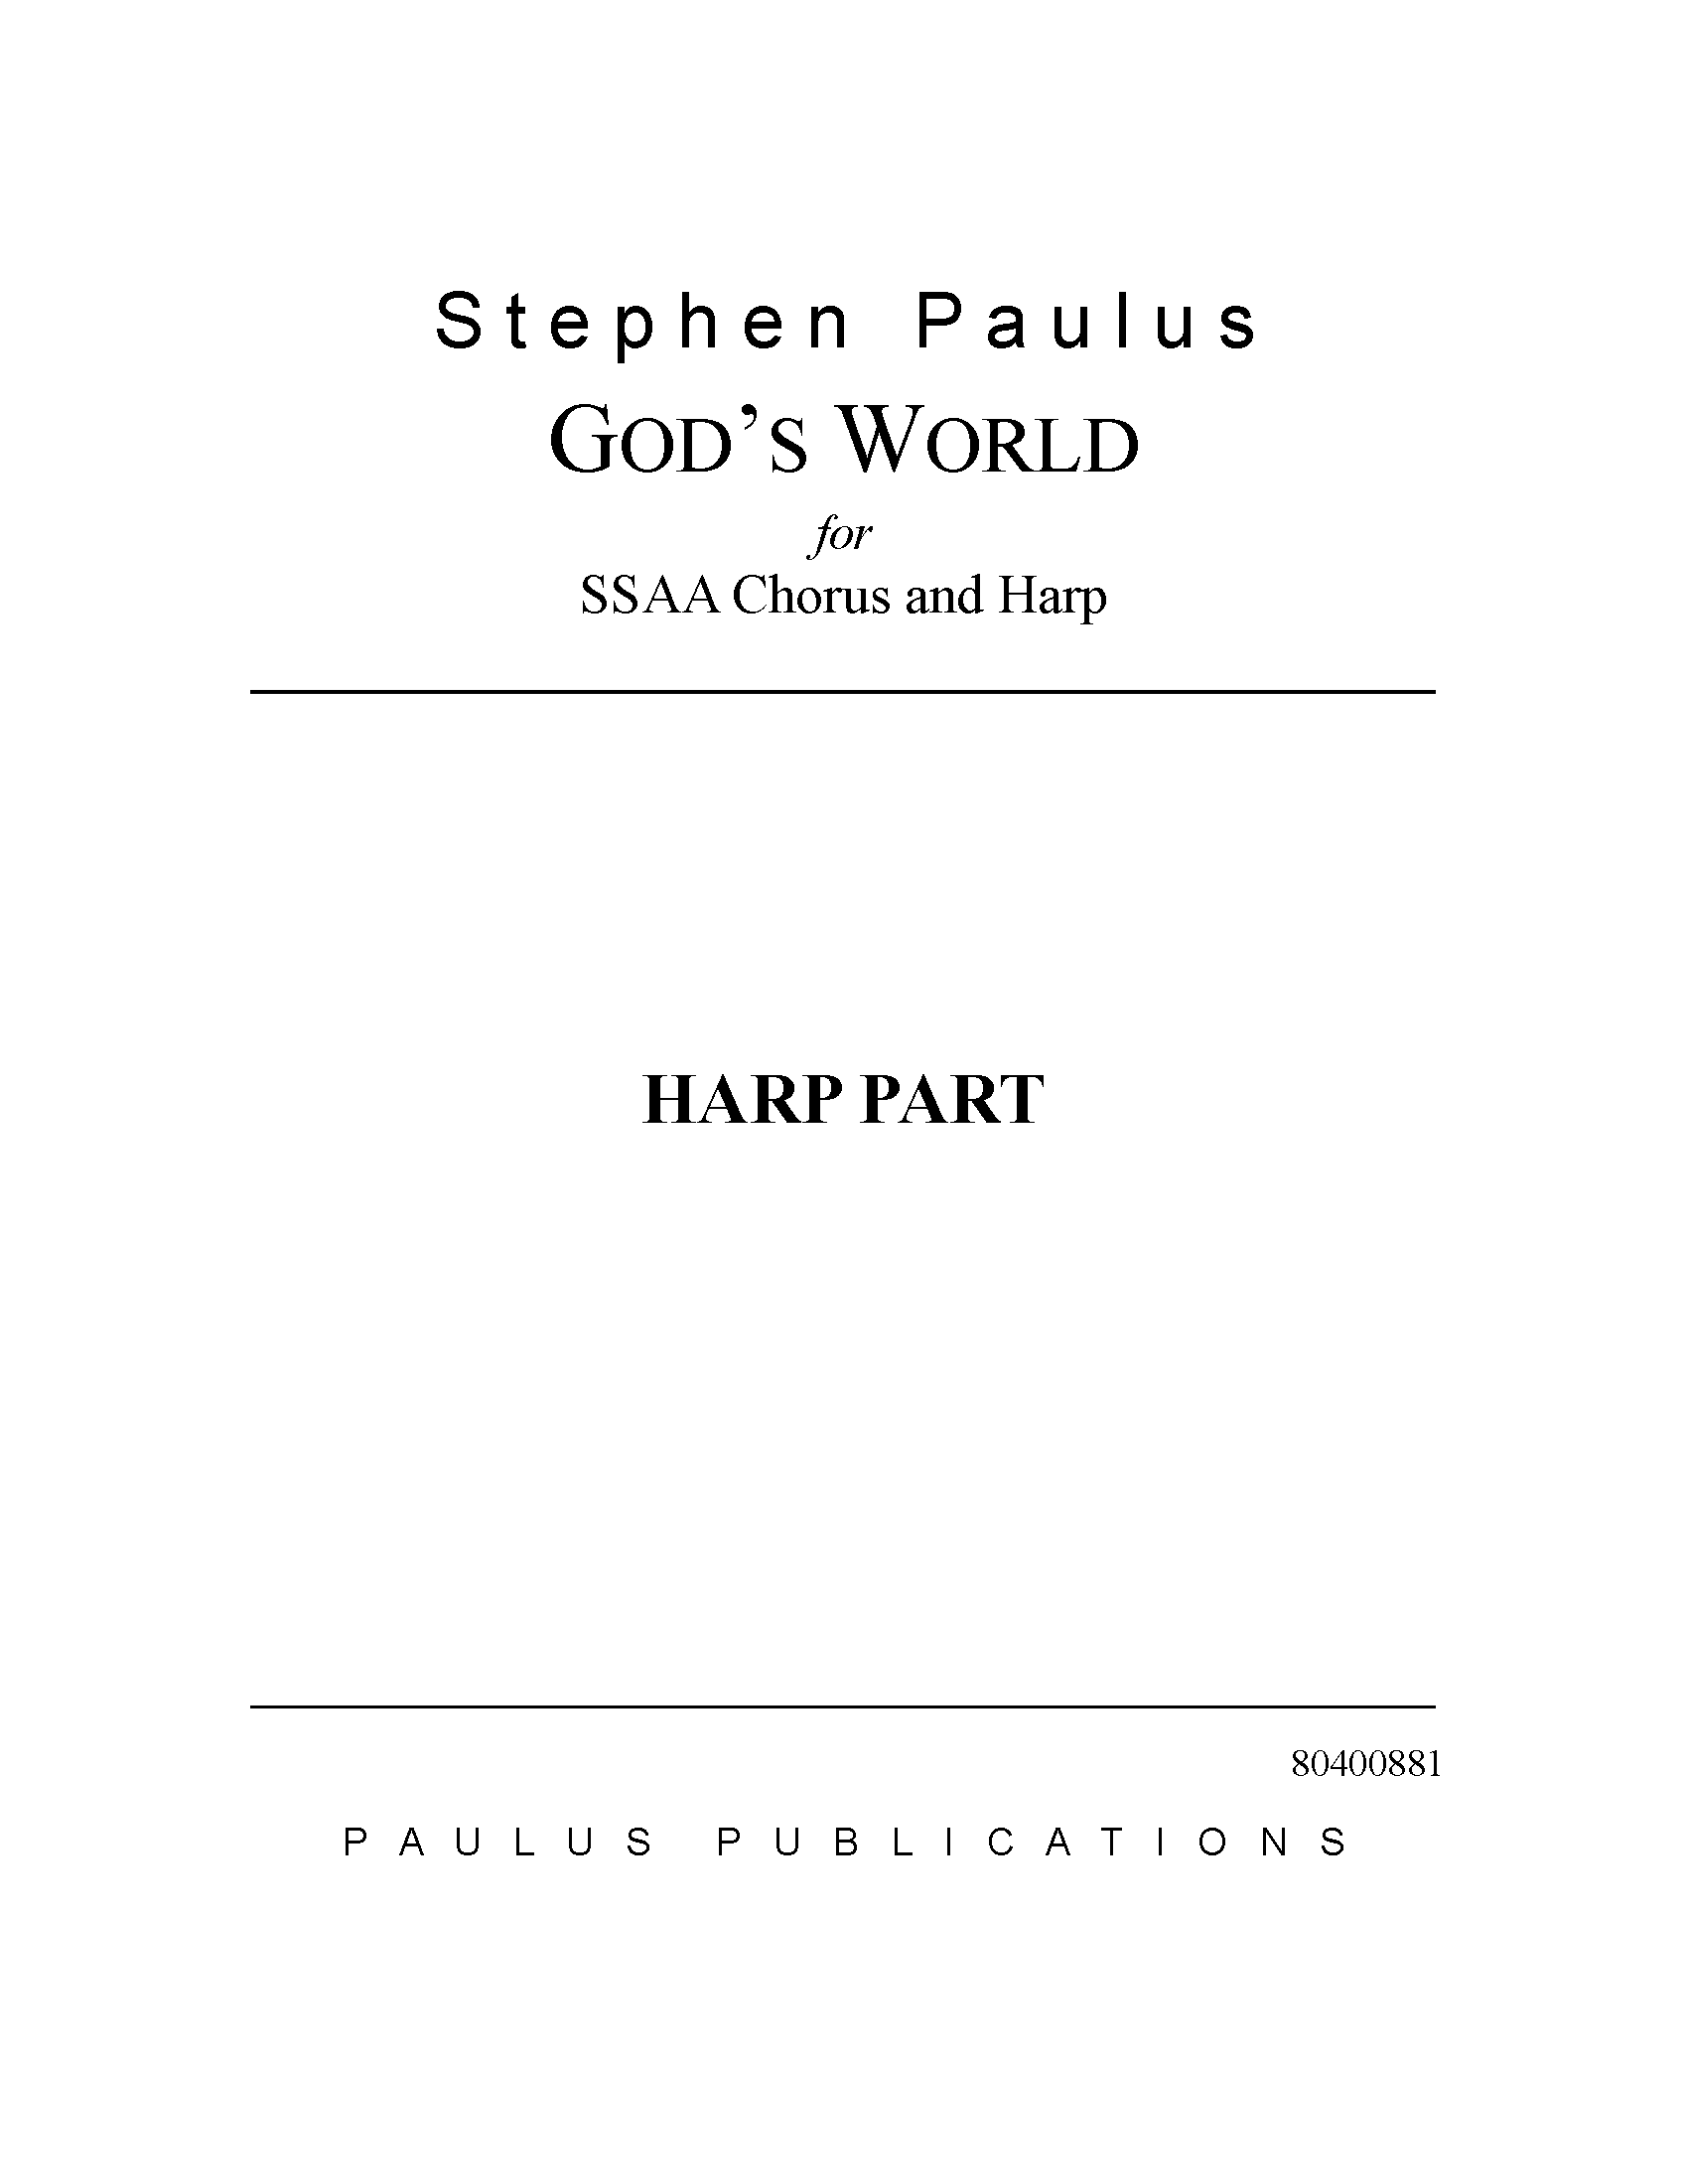 God's World (Harp part) for SSAA Chorus & Harp